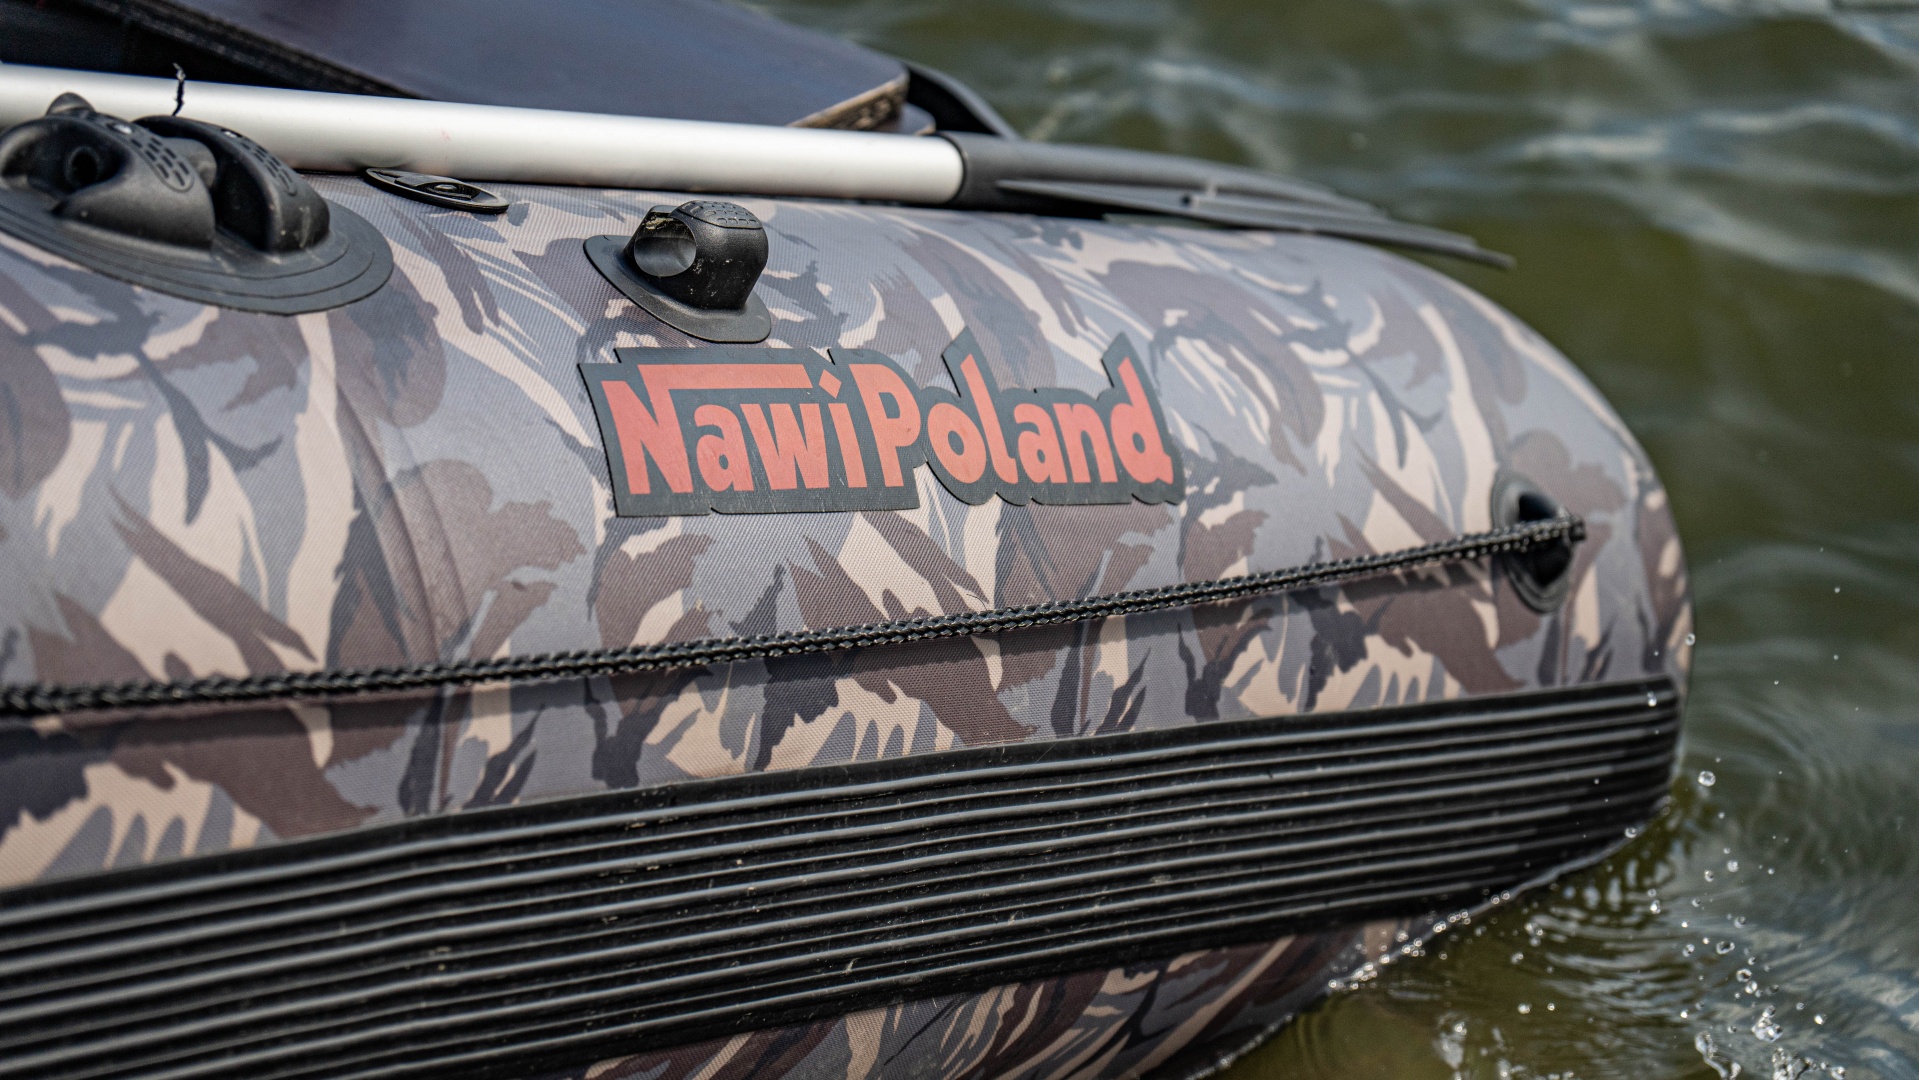 NawiPoland CAT 400 Inflatable Boat - Katamaran